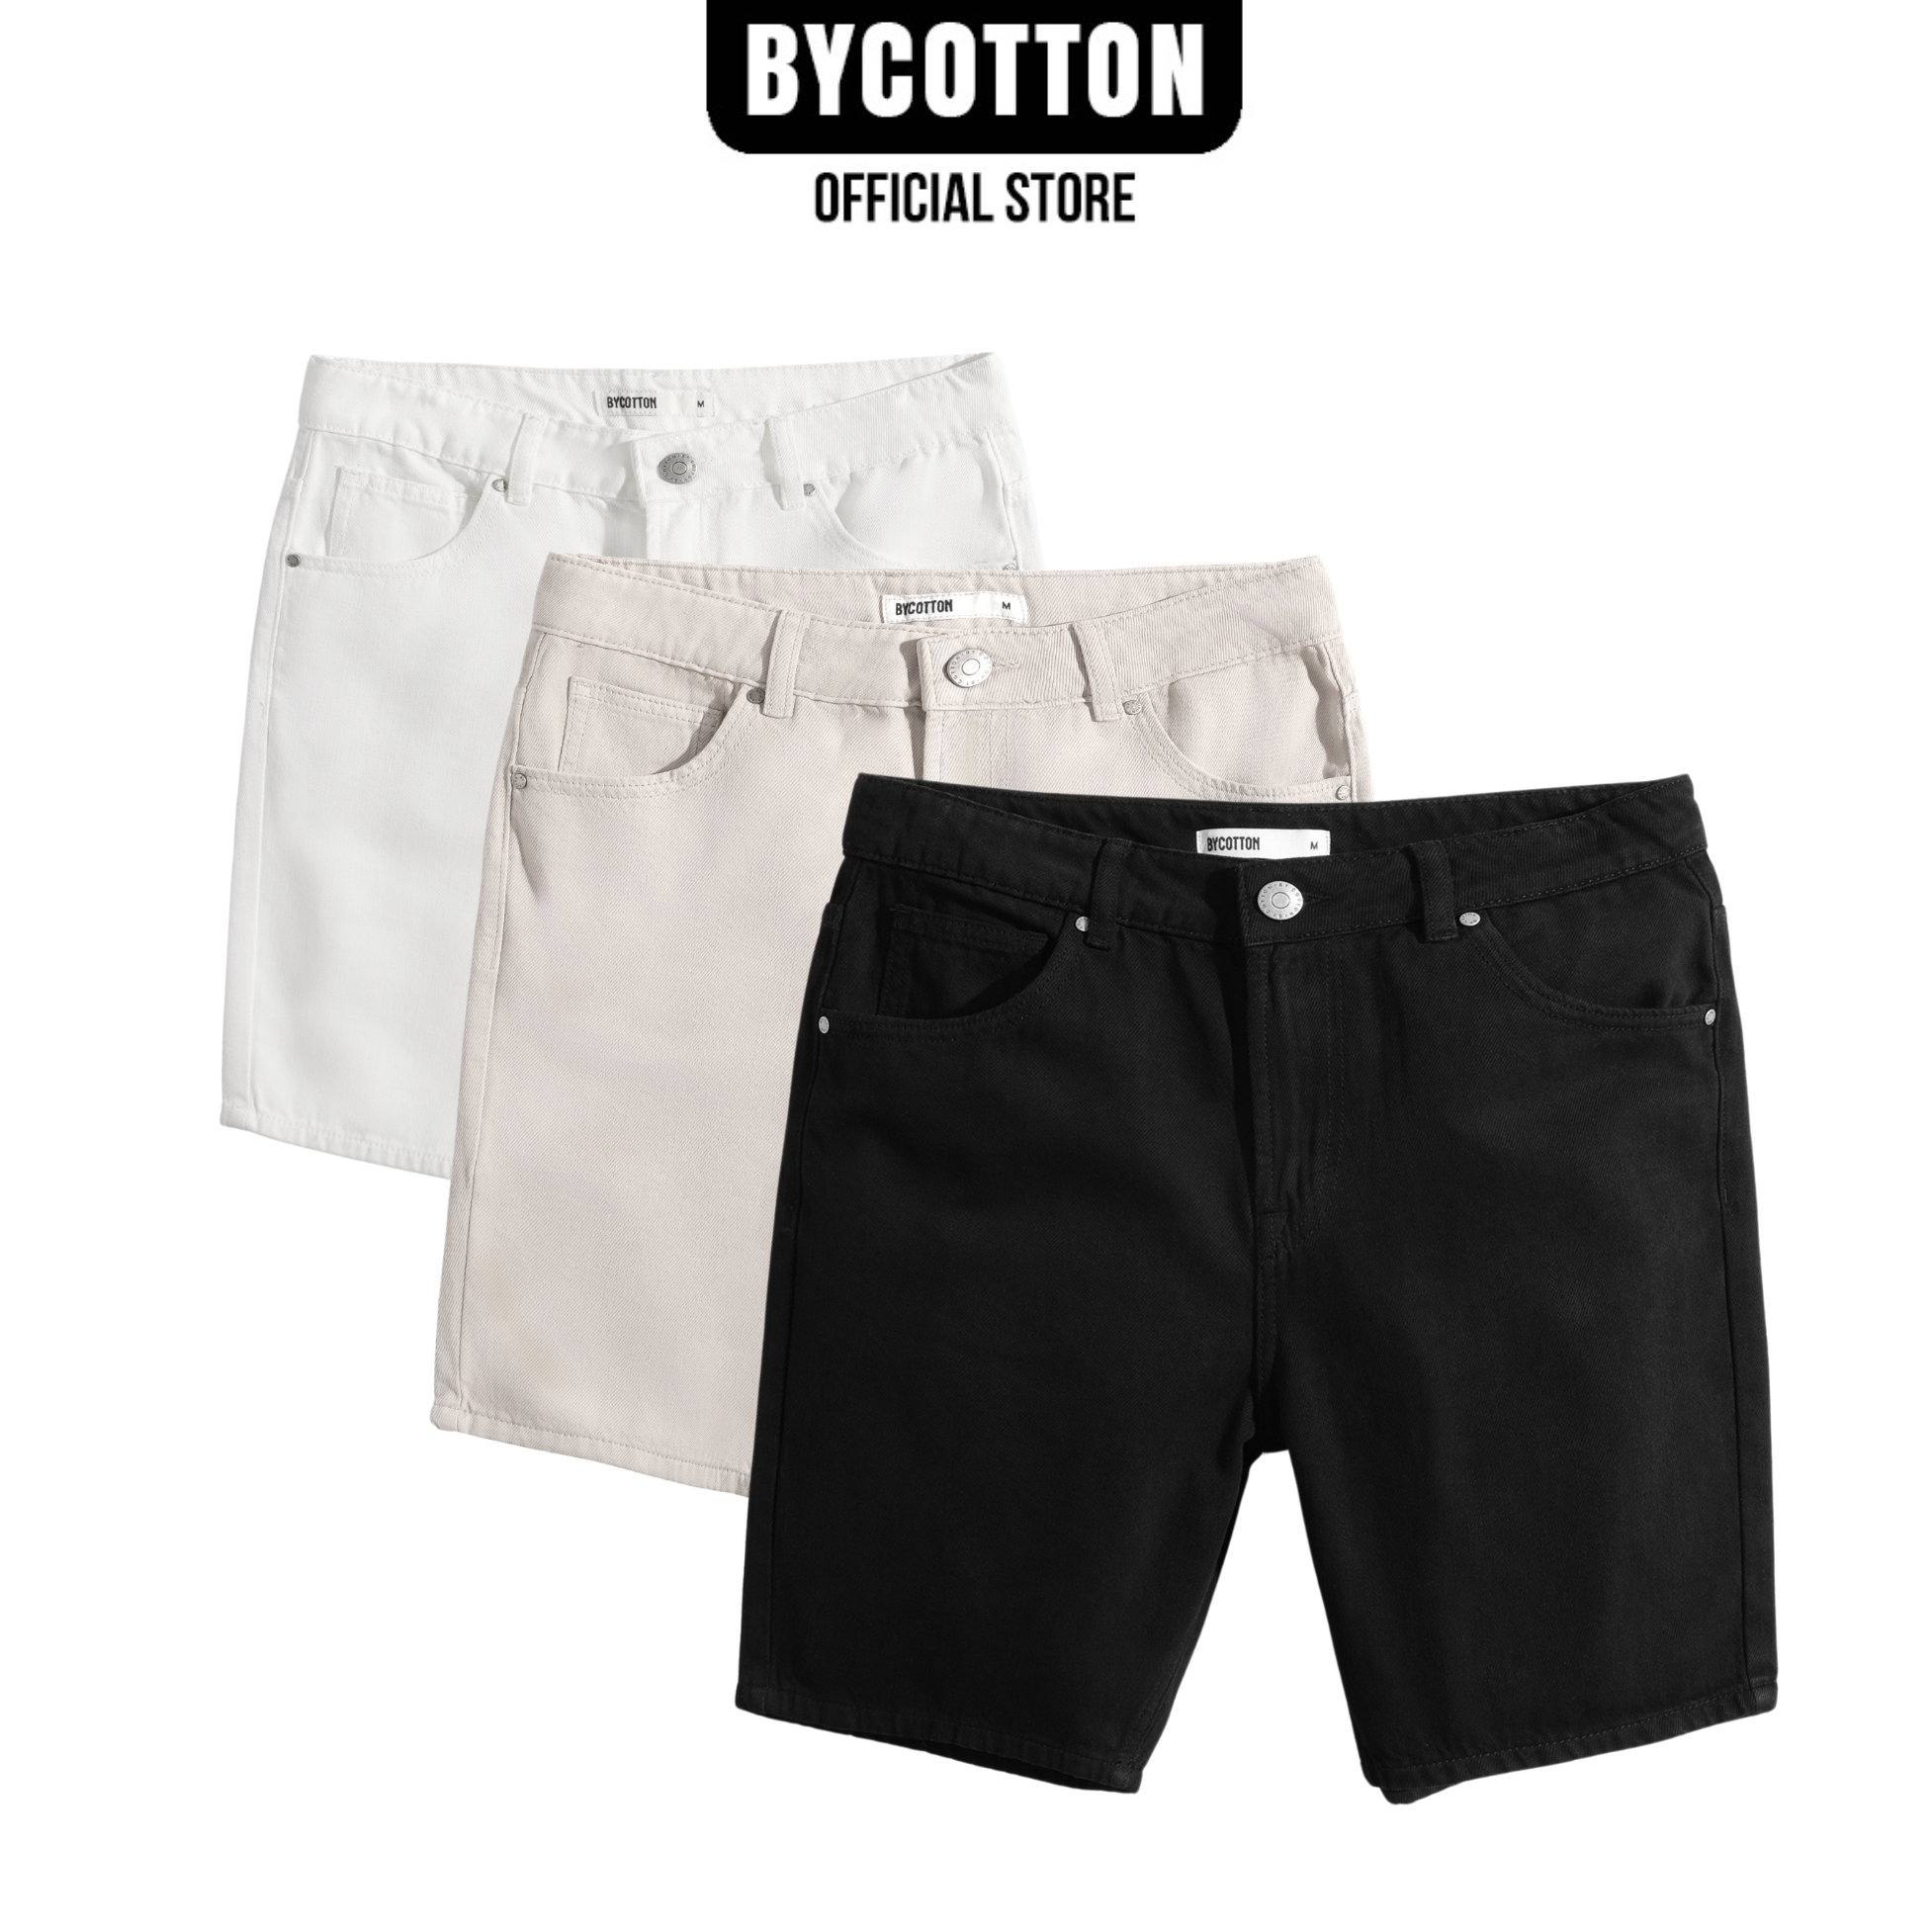 Quần Short Jeans Nam Cao Cấp 3 Màu Đen - Trắng - Be BY COTTON